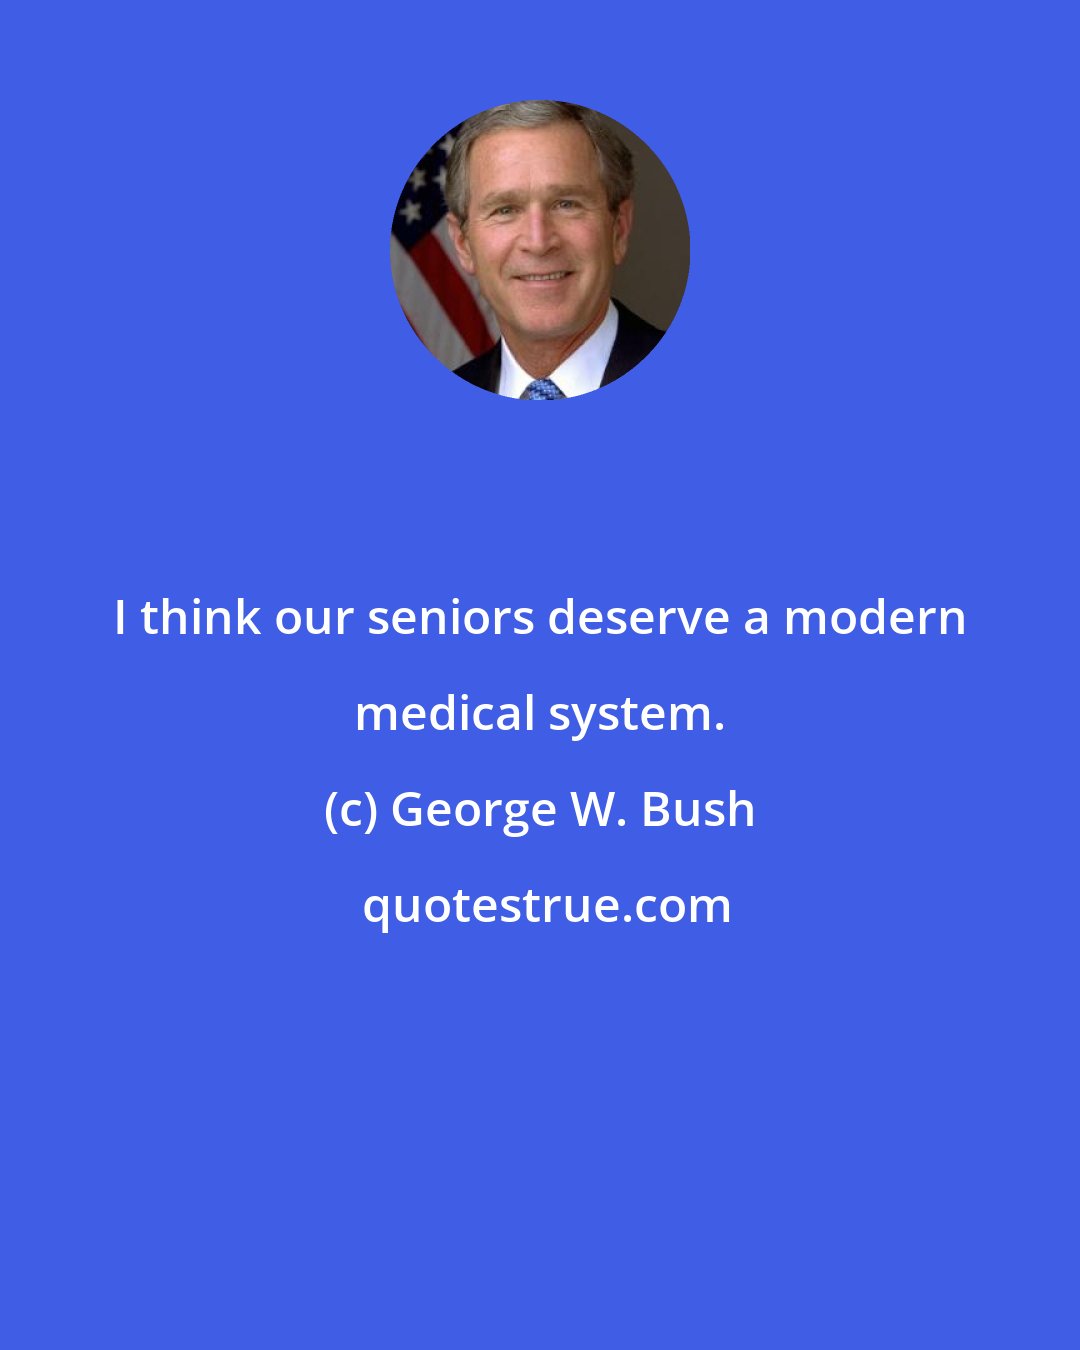 George W. Bush: I think our seniors deserve a modern medical system.